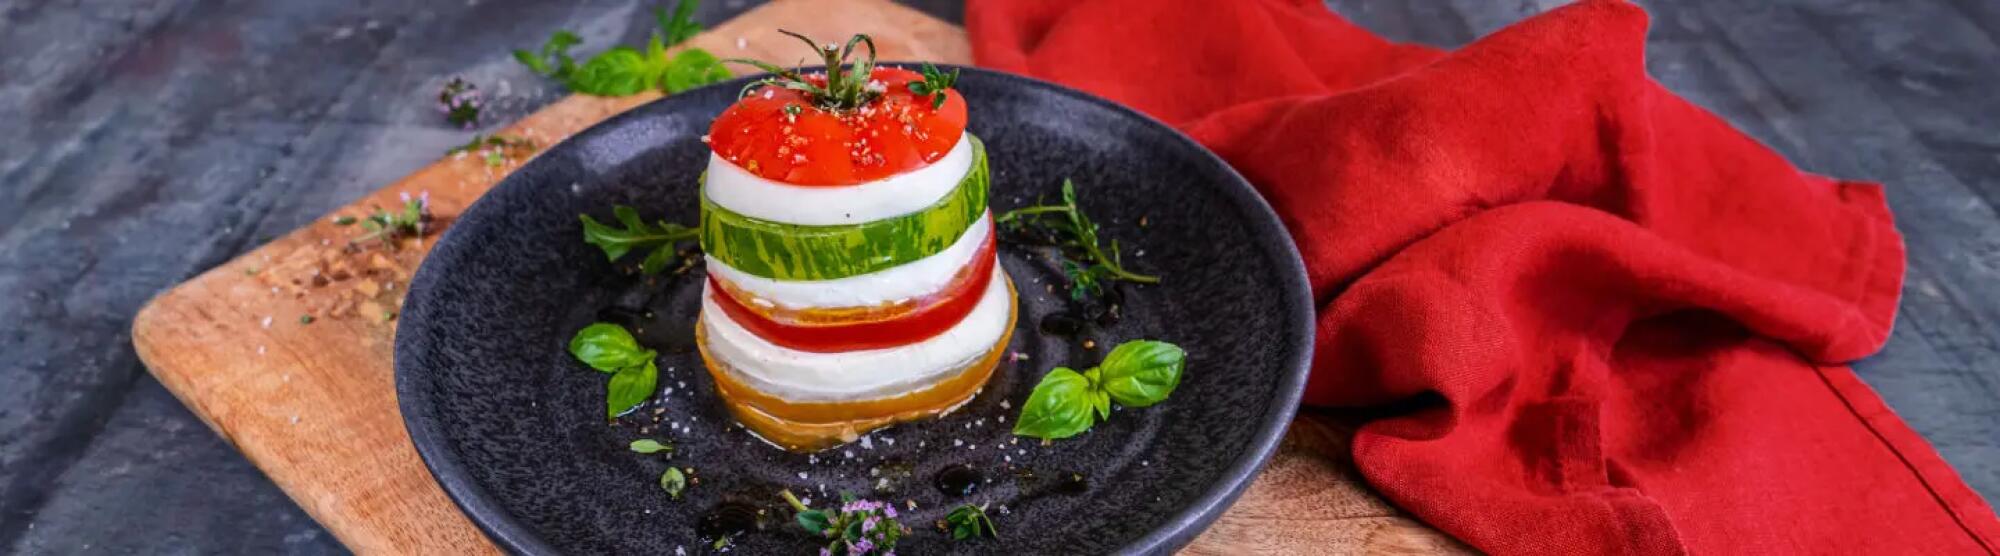 Recette : Salade tomate-mozzarella en millefeuille